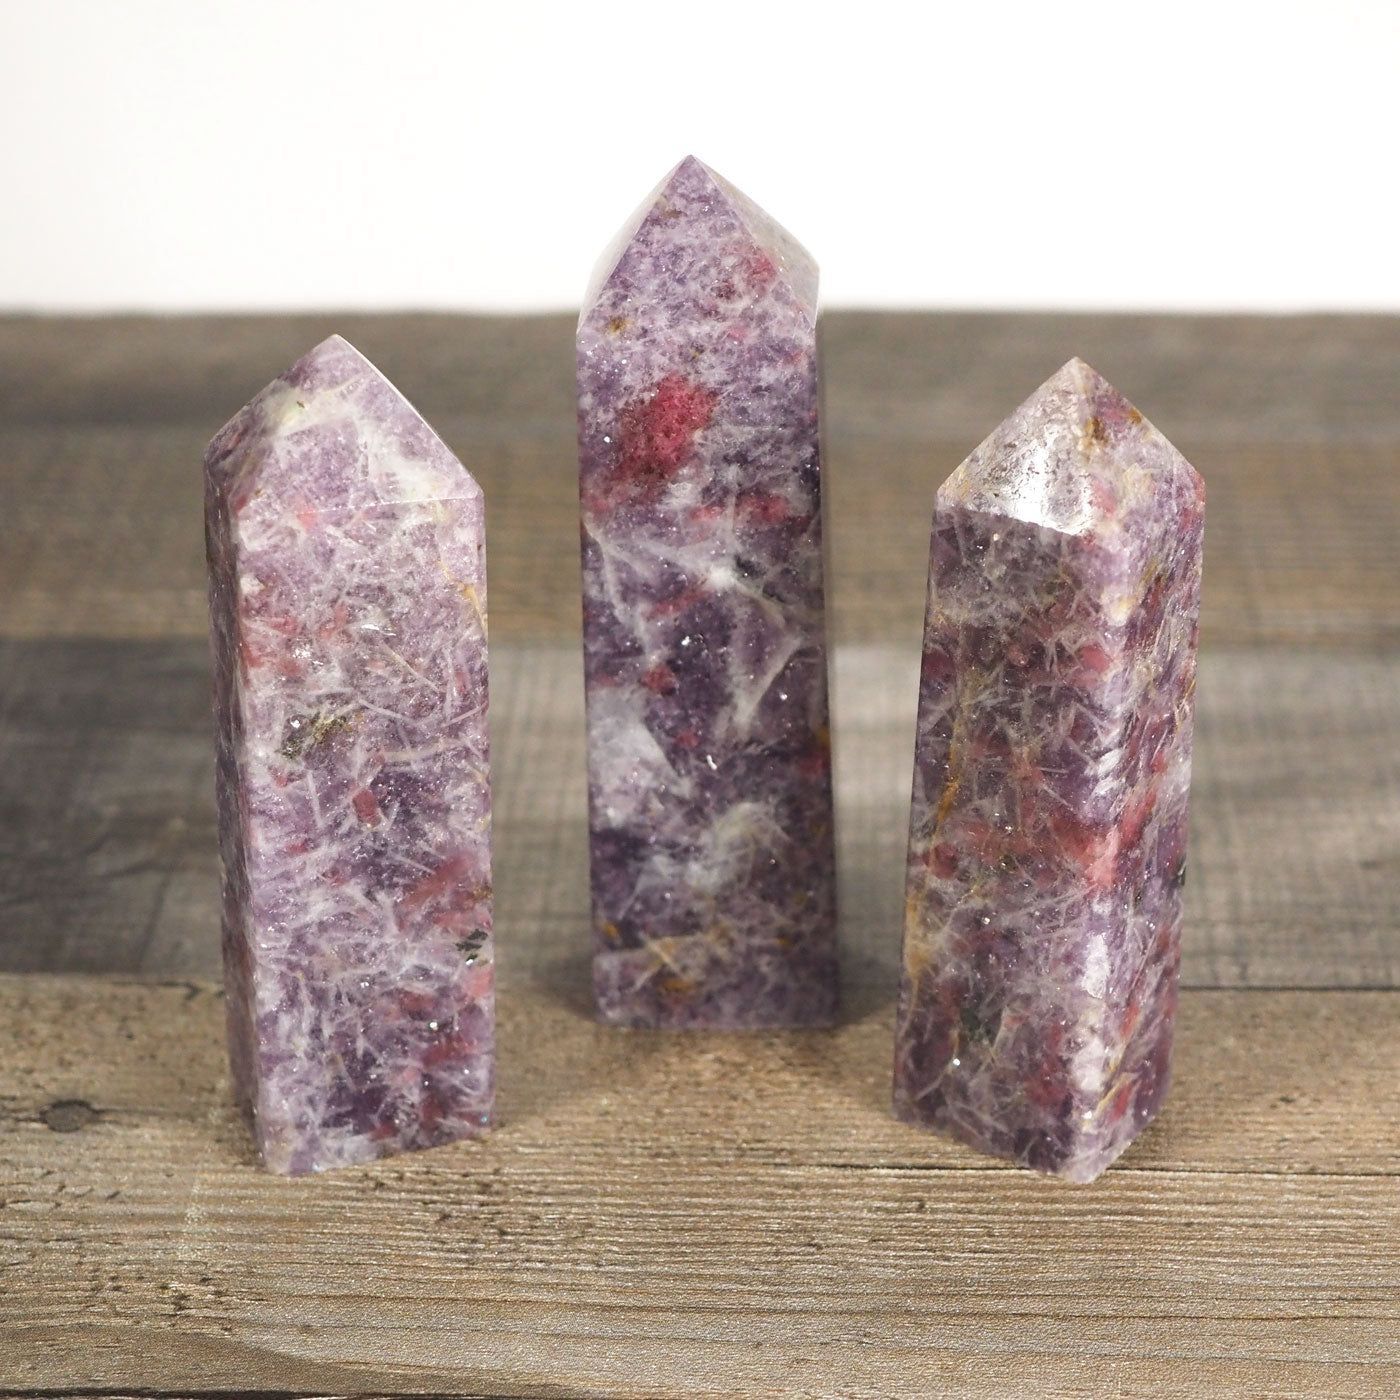 3 Sparkly Purple Unicorn Stone Towers, each around 4" tall